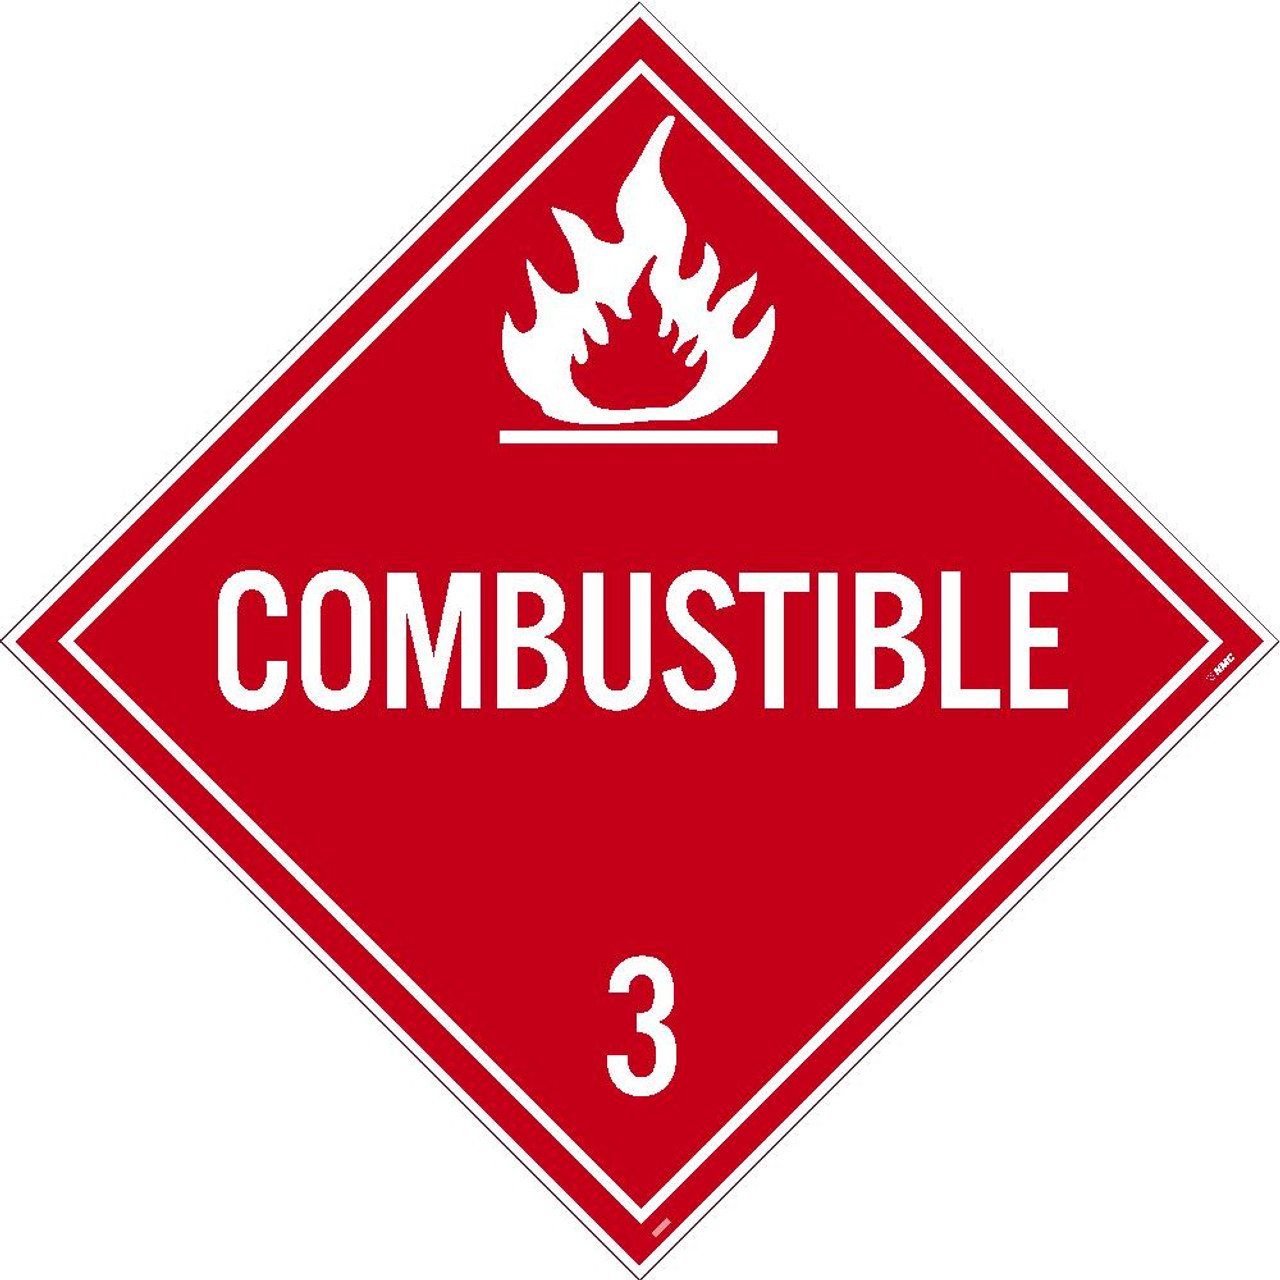 Combustible 3 Dot Placard Sign Pressure Sensitive Removable Vinyl .0045
